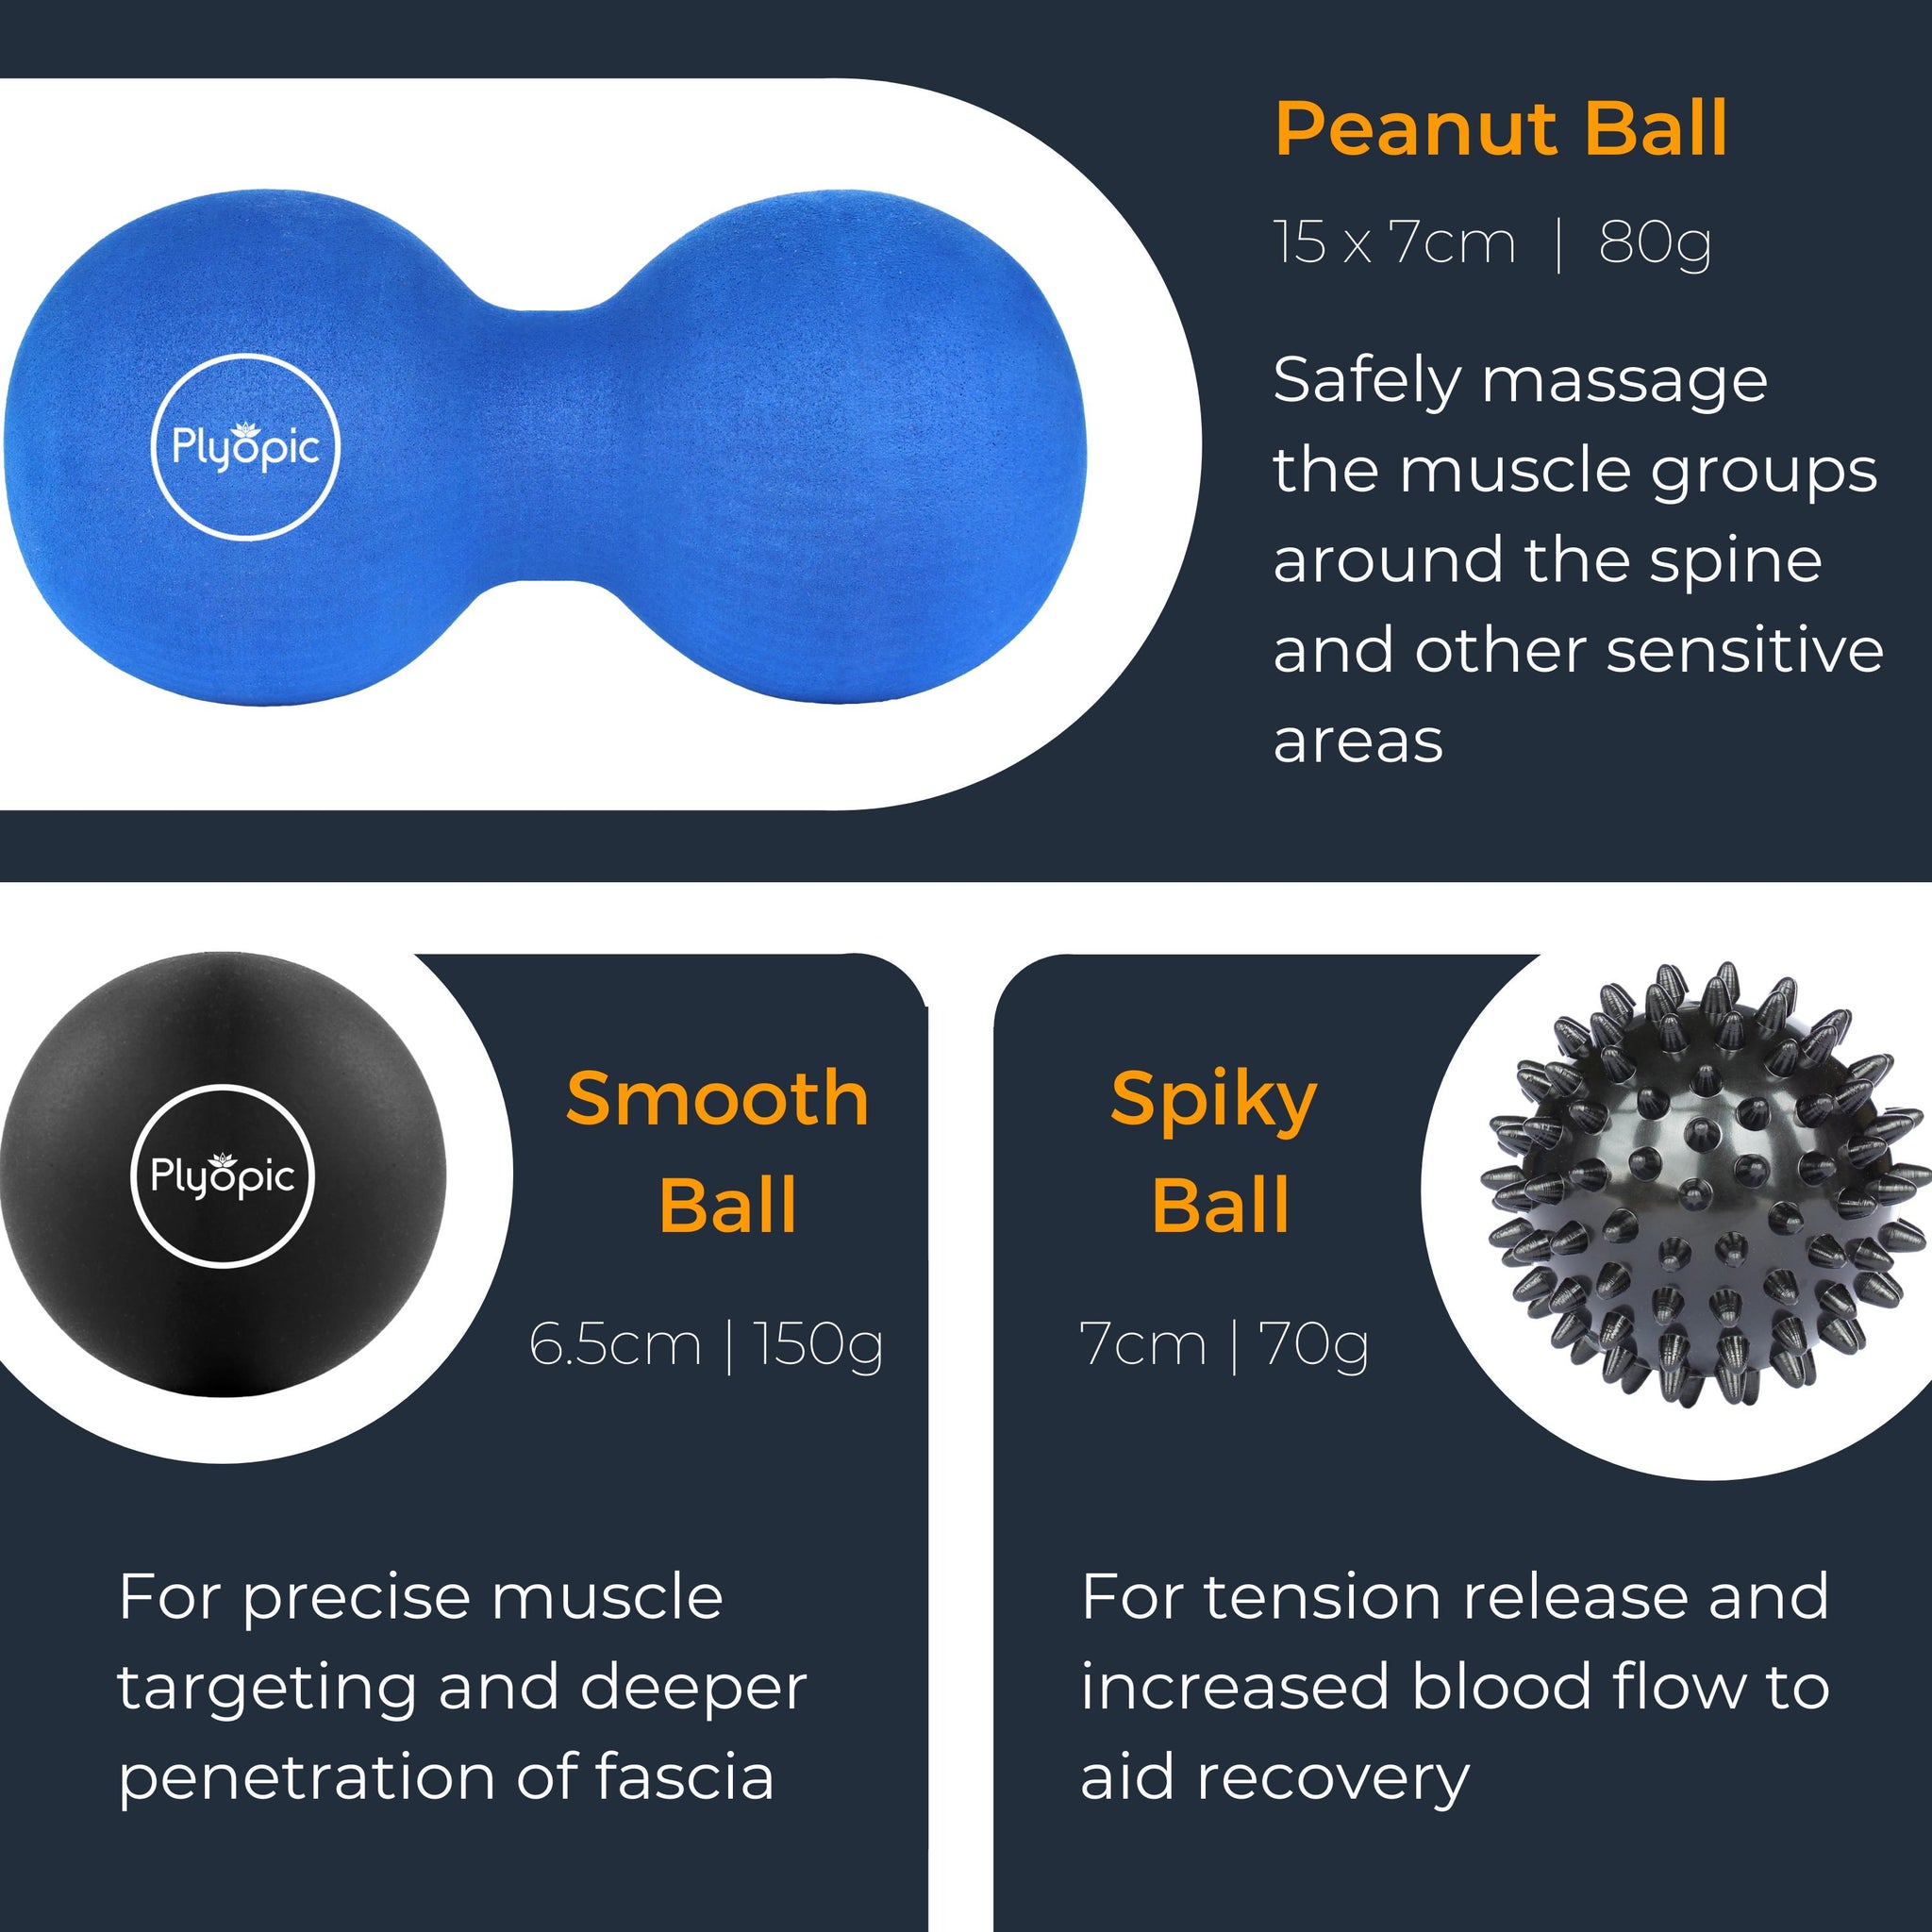 Plyopic Duoball Massage Ball Set - With Double Peanut Ball, Smooth Ball and Spiky Ball